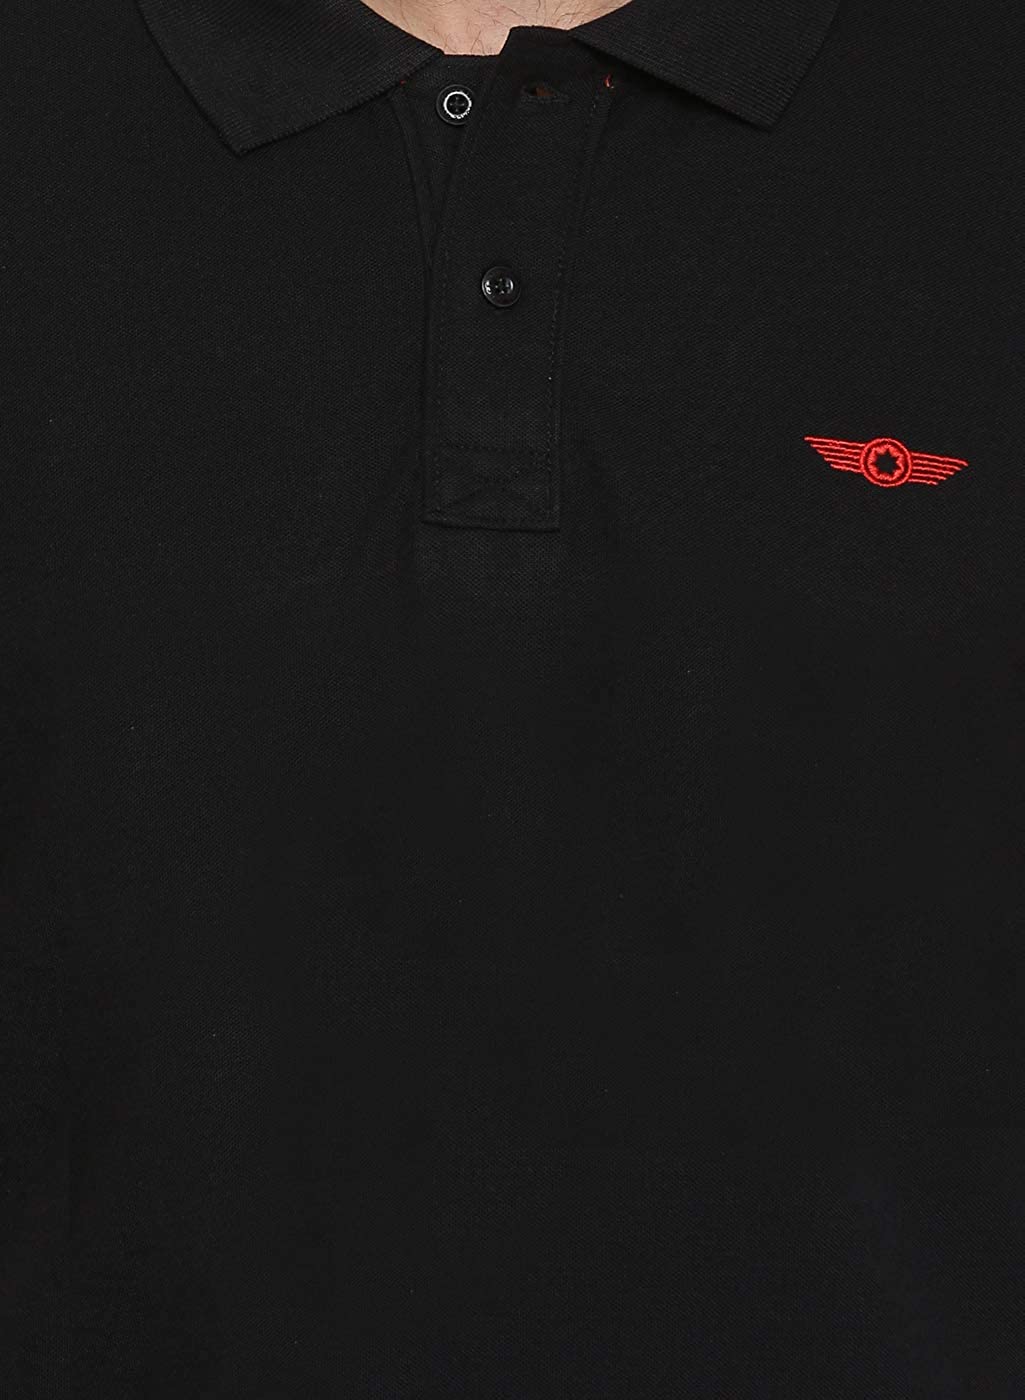 Black Slim Fit Polo Neck T-Shirt with collar for Men - Stilento